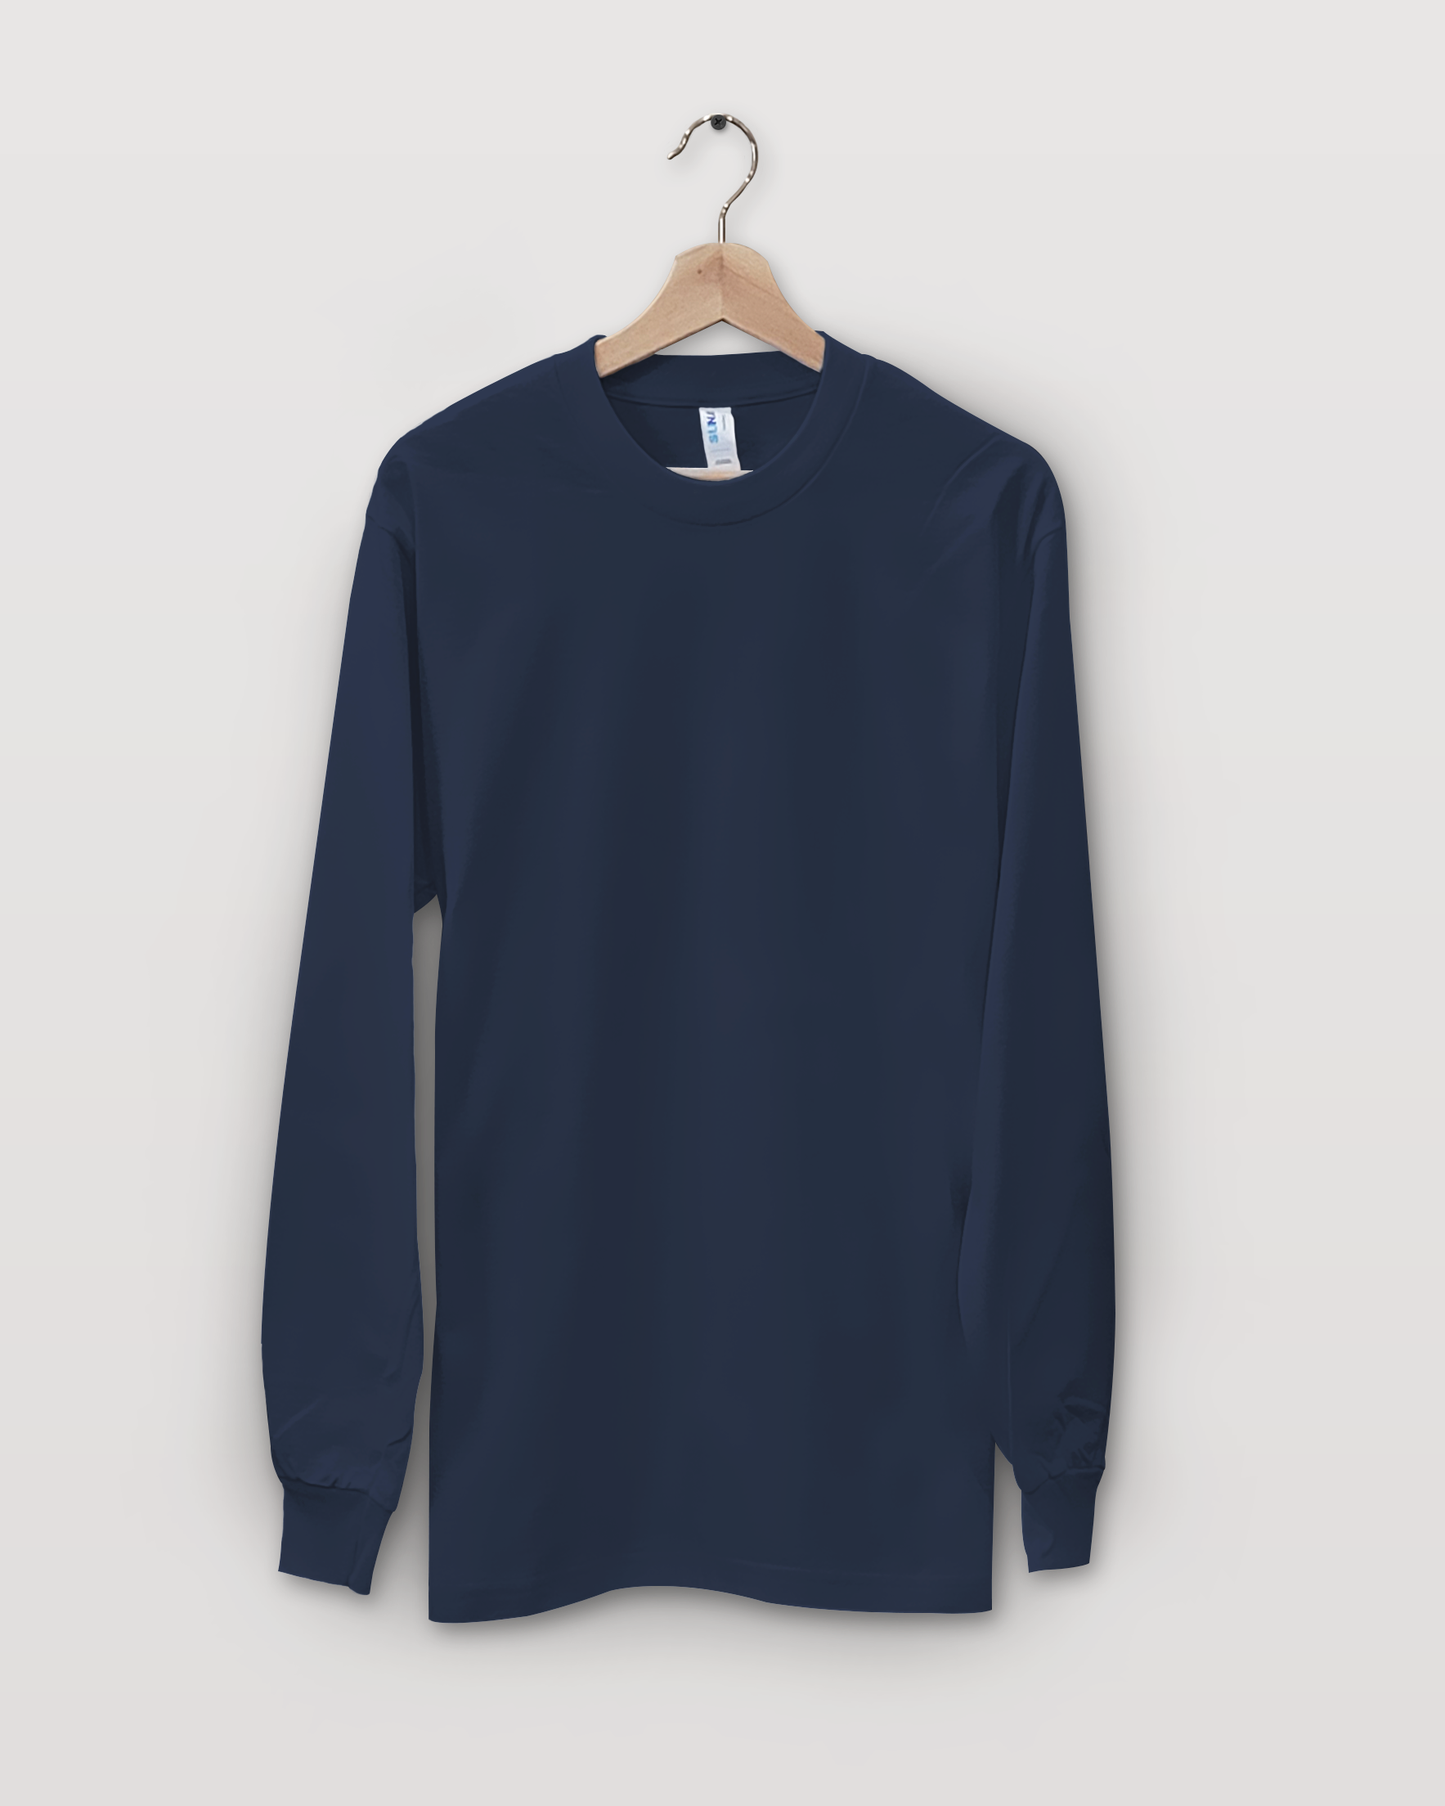 Suna Cotton® Adult Long Sleeve T-shirt - 424